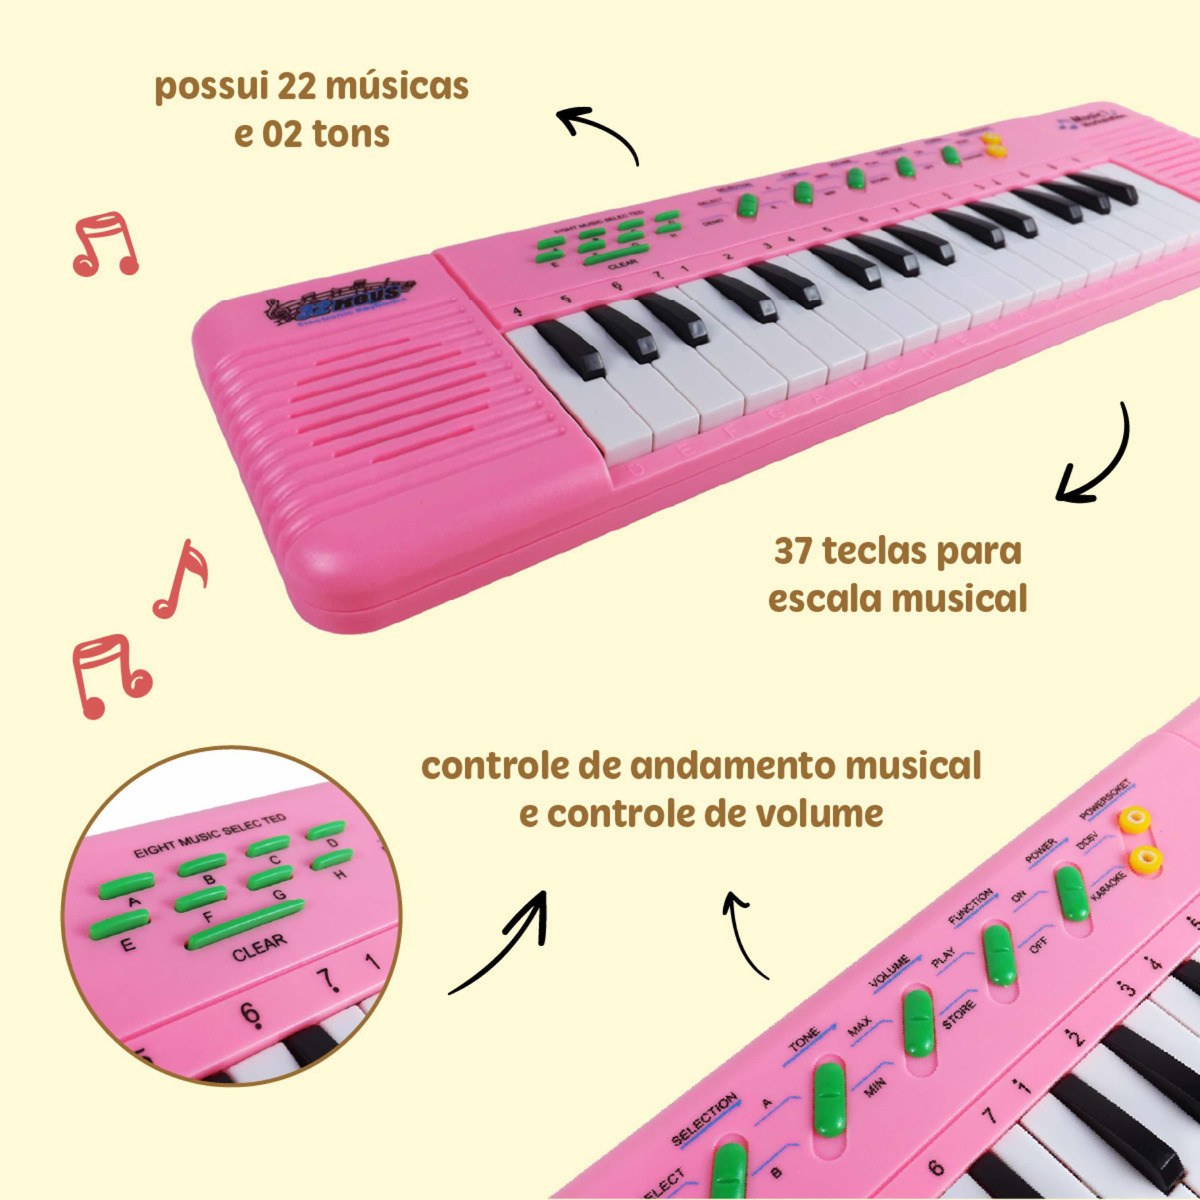 Teclado Infantil Musical Grava E reproduz Lets Rock Toyng - Lojas